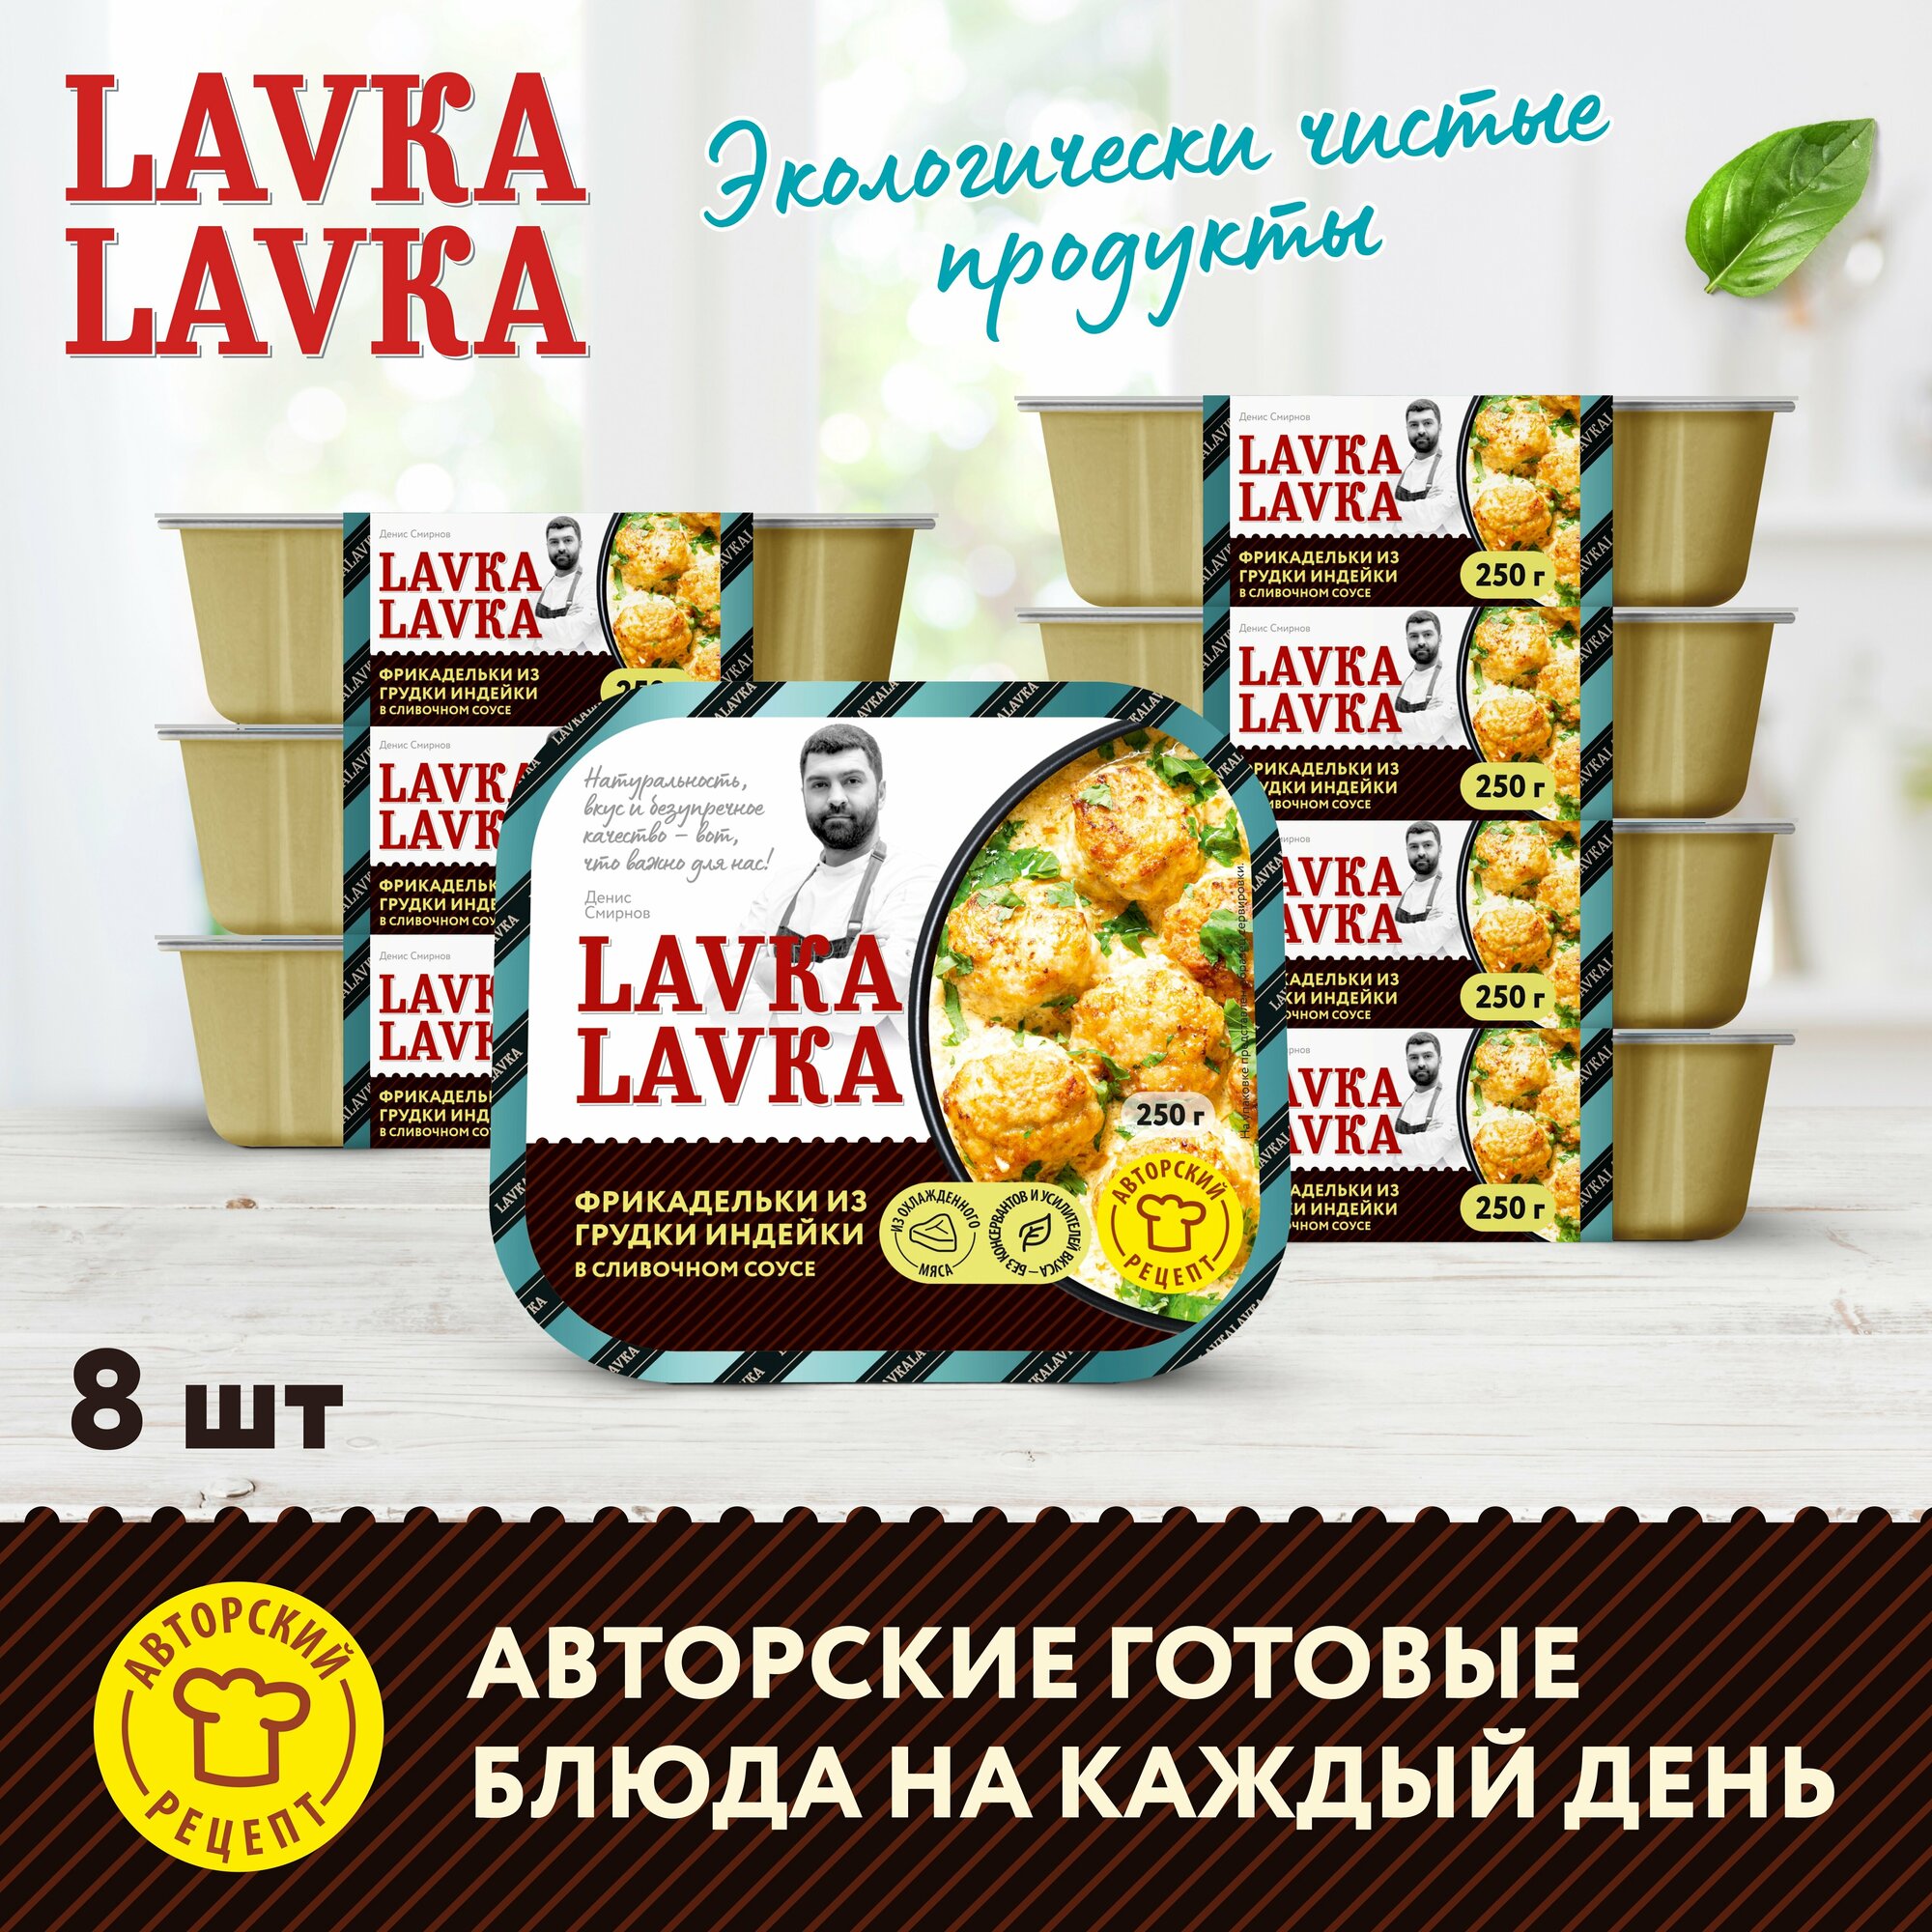 Фрикадельки из грудки индейки в сливочном соусе 8 уп. по 250 гр. (LavkaLavka)